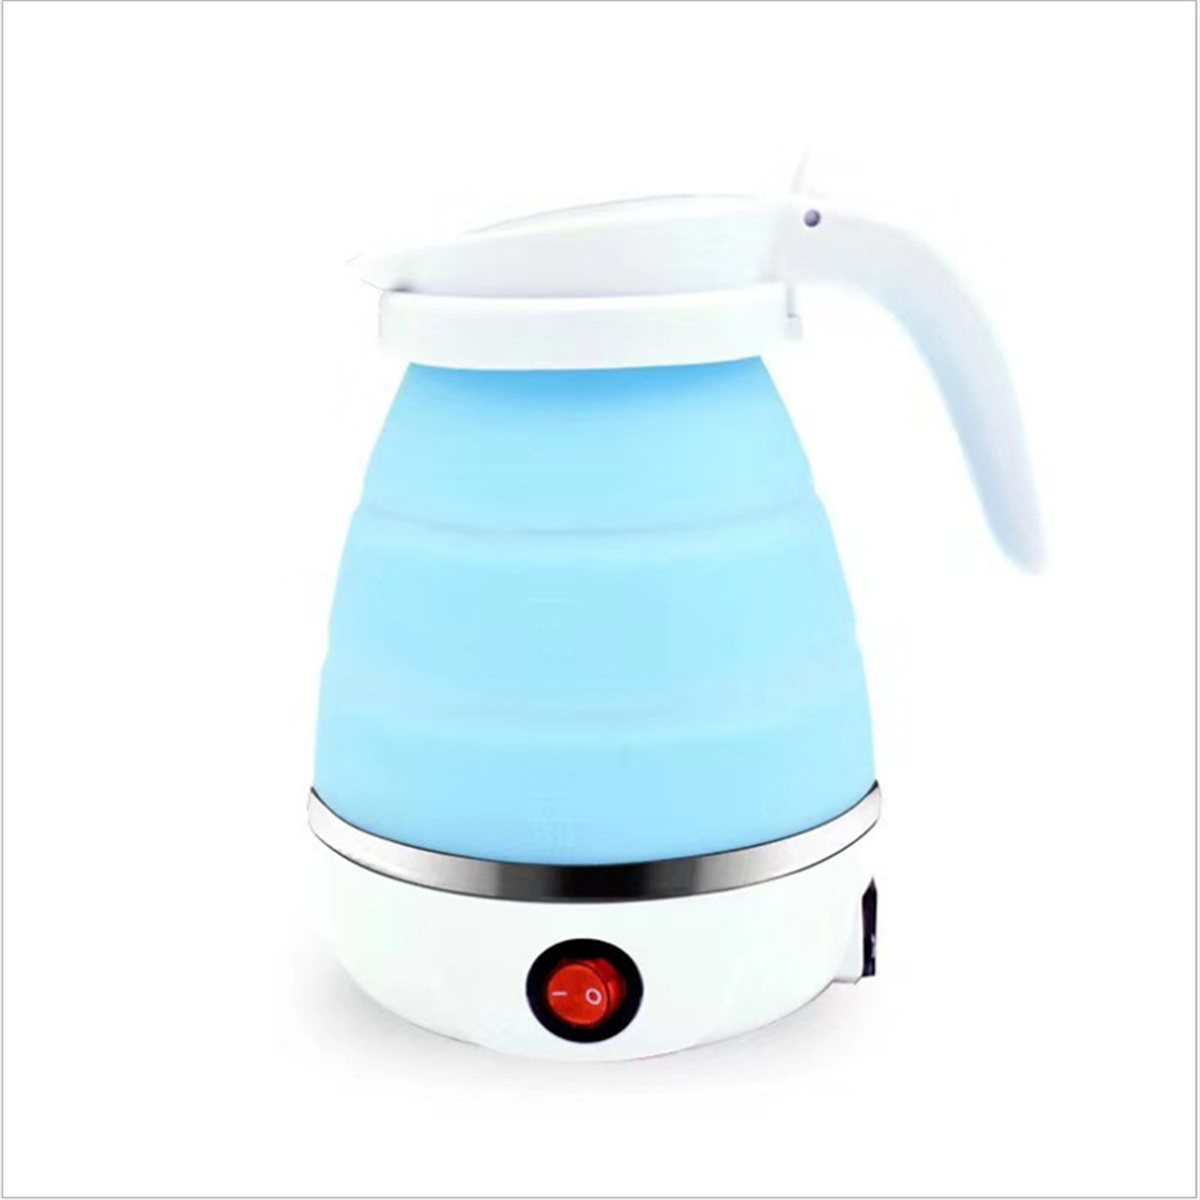 FEI Elektrischer Wasserkocher Blau Blau Zusammenklappbarer Wasserkocher 304 Wasserkocher, Edelstahl Mini-Wasserkocher